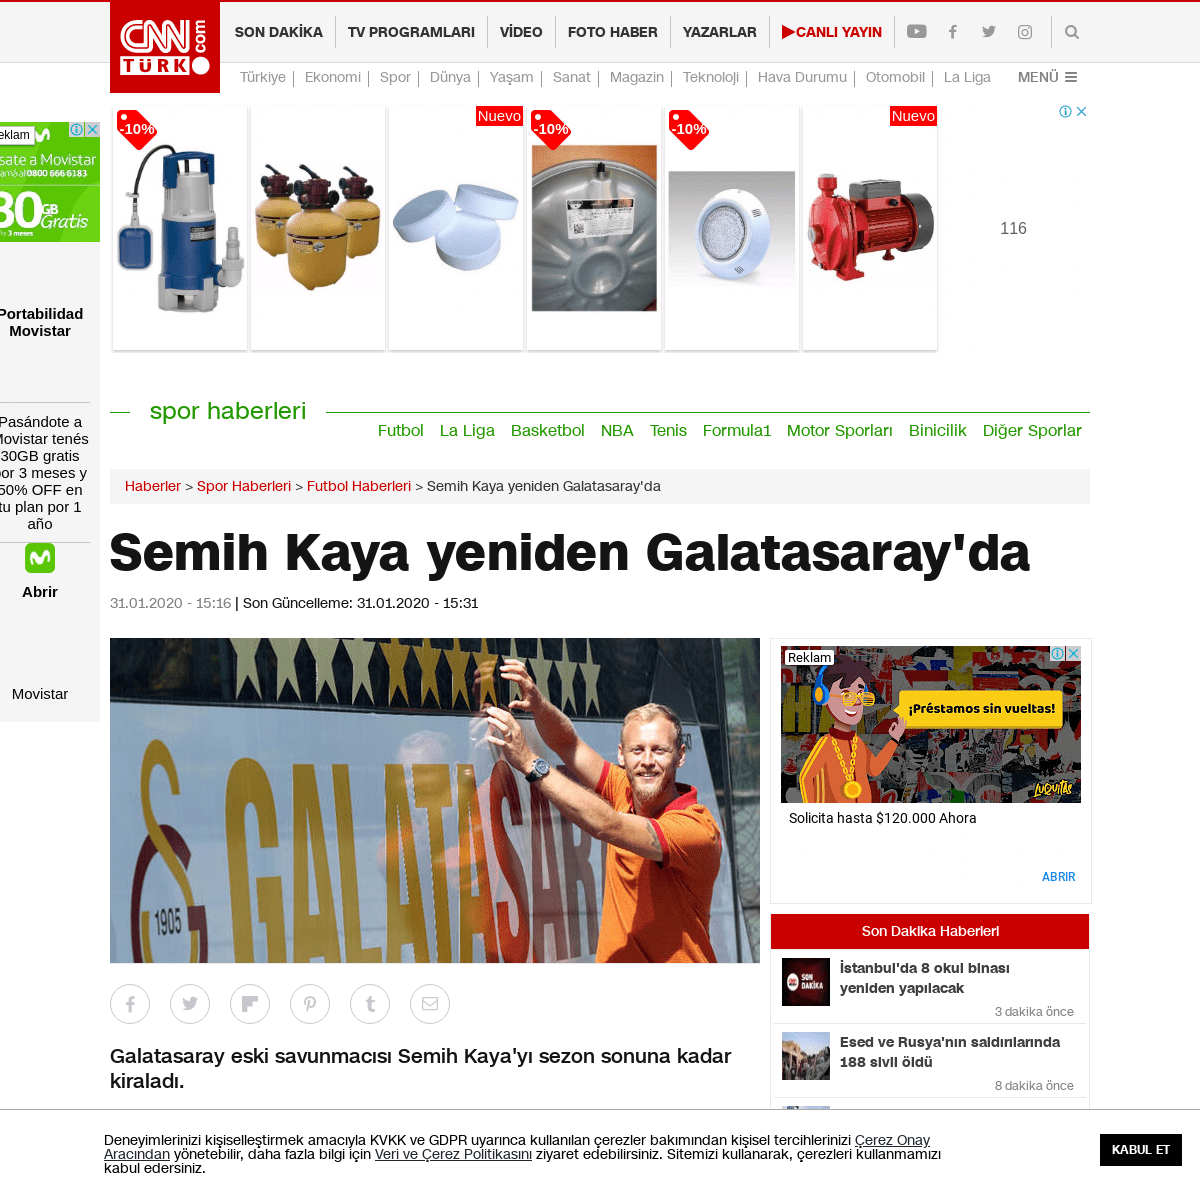 A complete backup of www.cnnturk.com/spor/futbol/semih-kaya-yeniden-galatasarayda